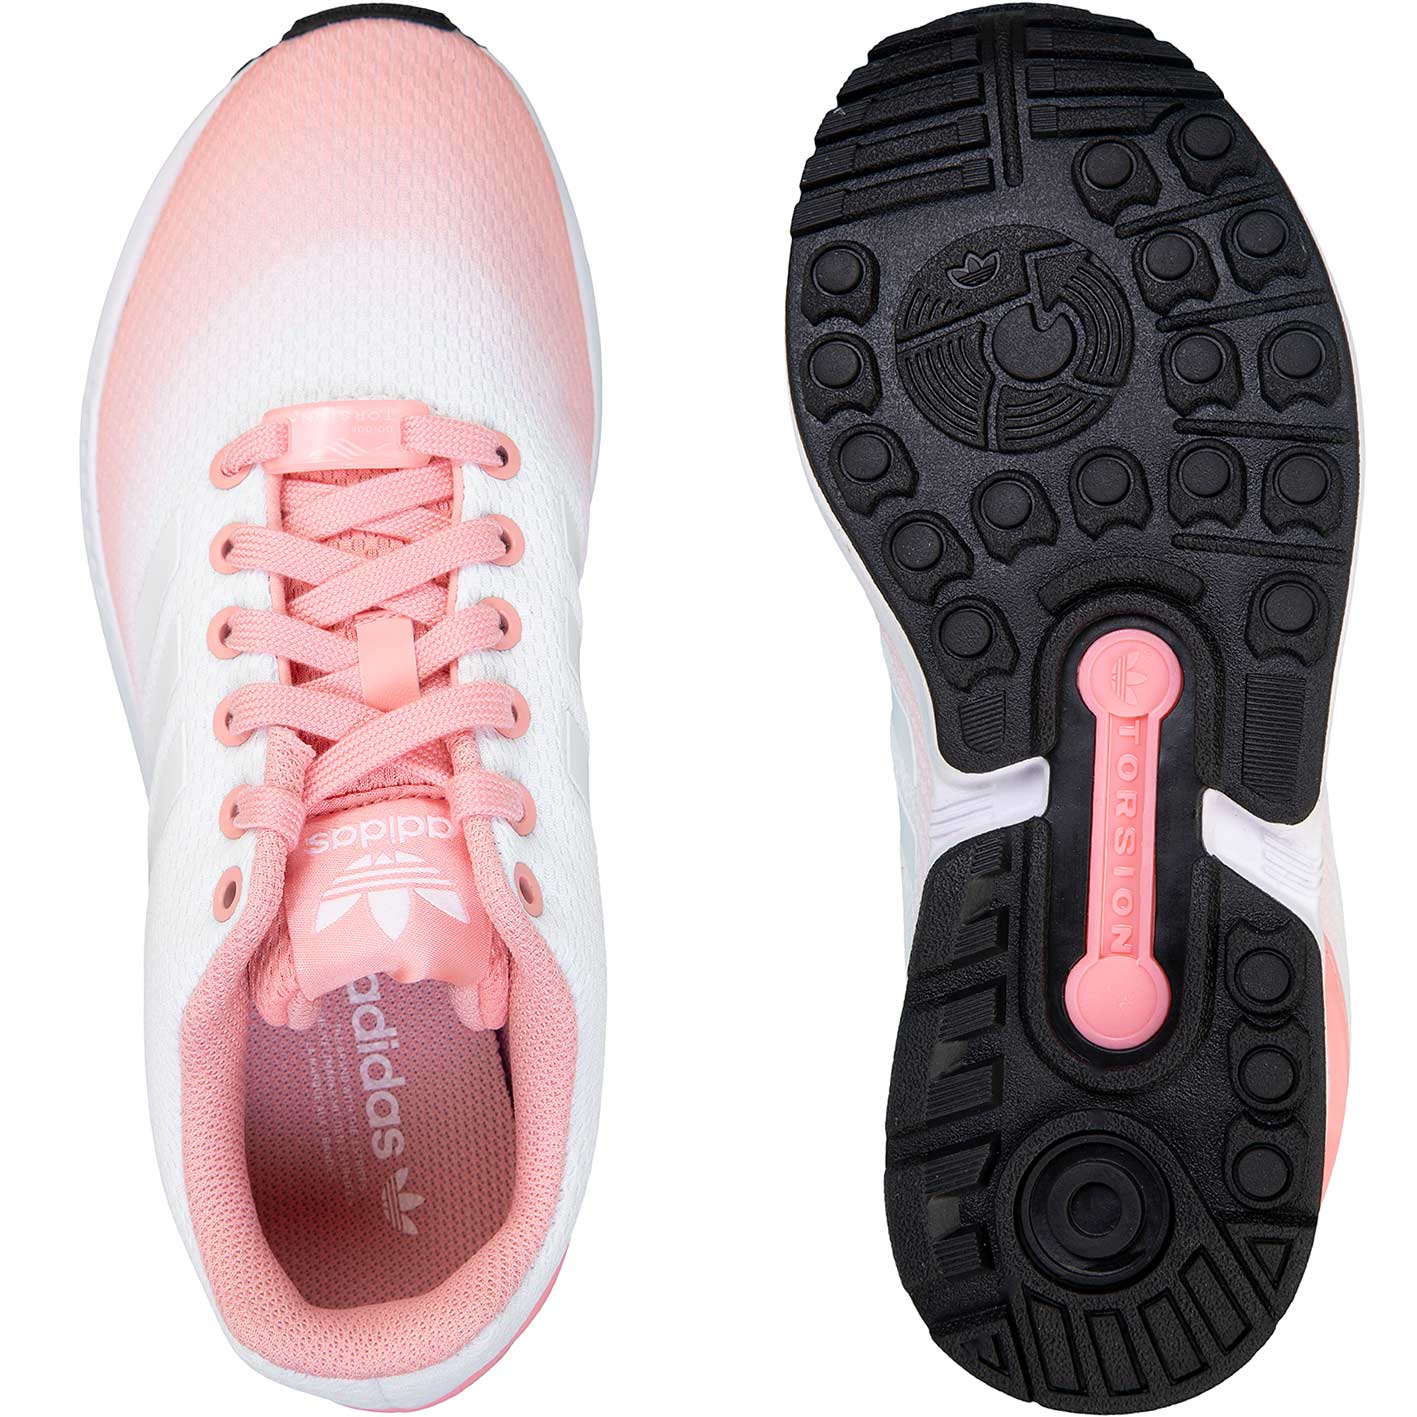 ☆ Adidas ZX Flux Damen Sneaker rosa/weiß - hier bestellen!